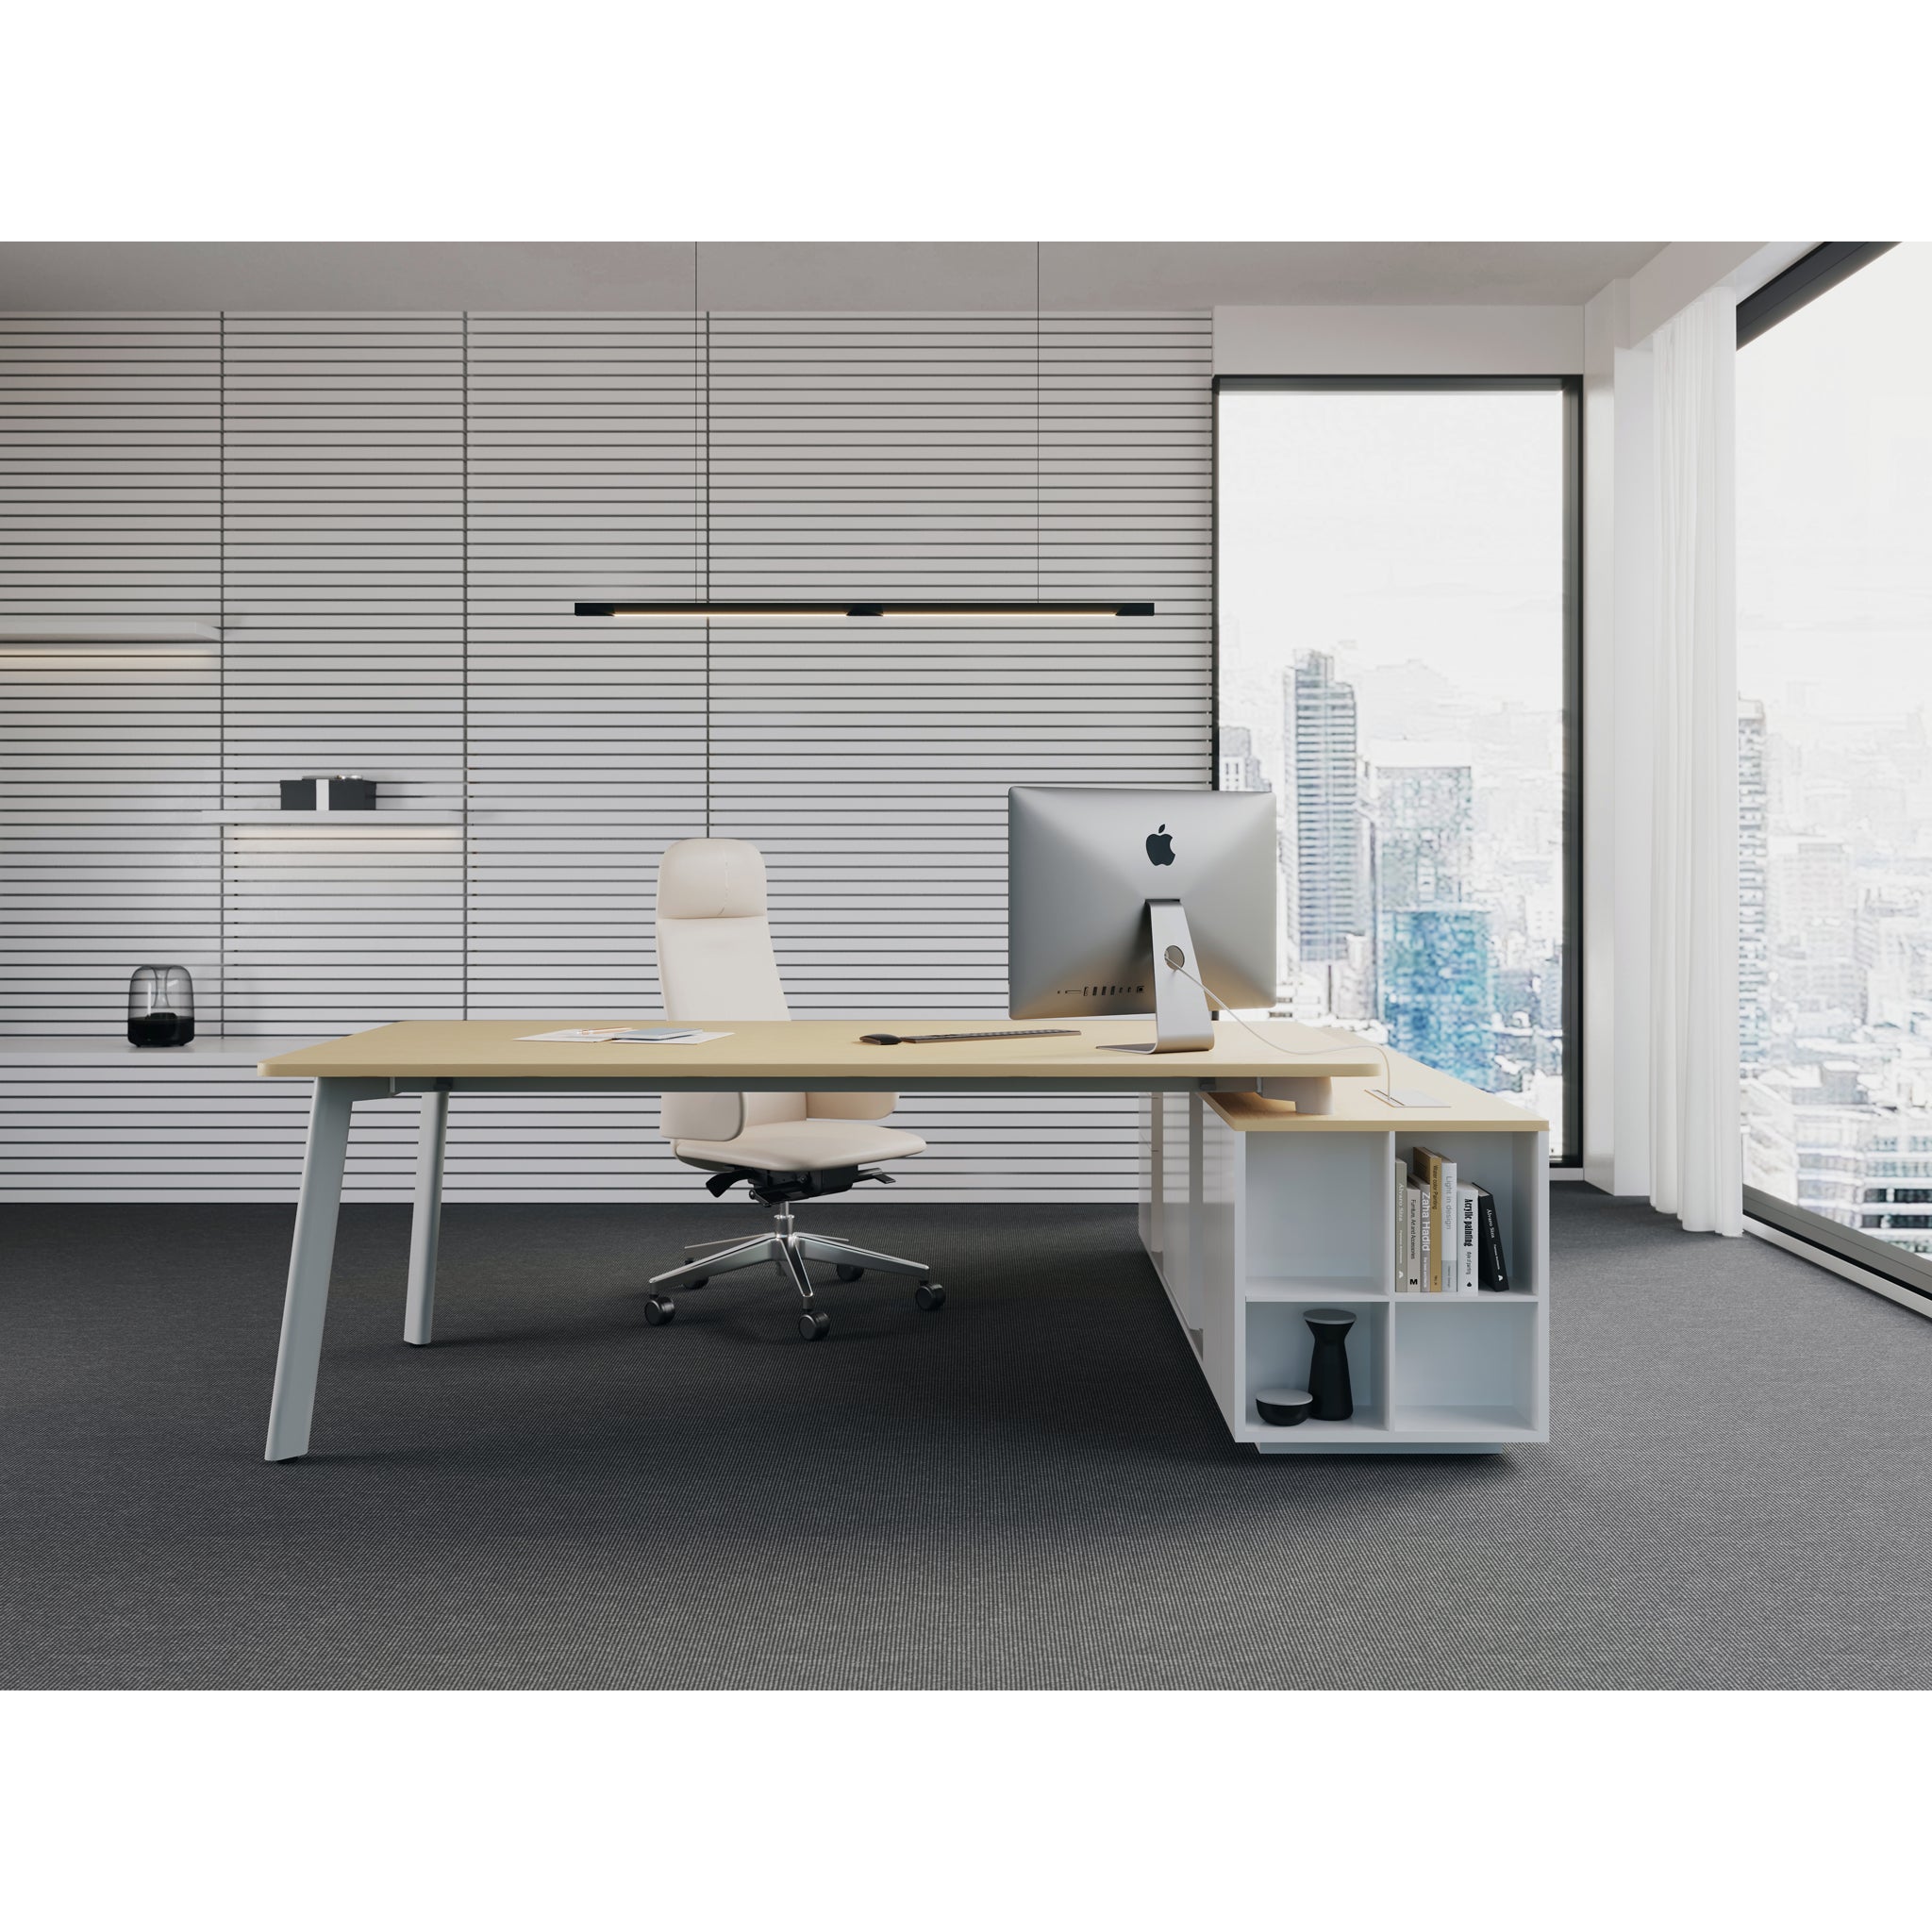 Sok - Office Table